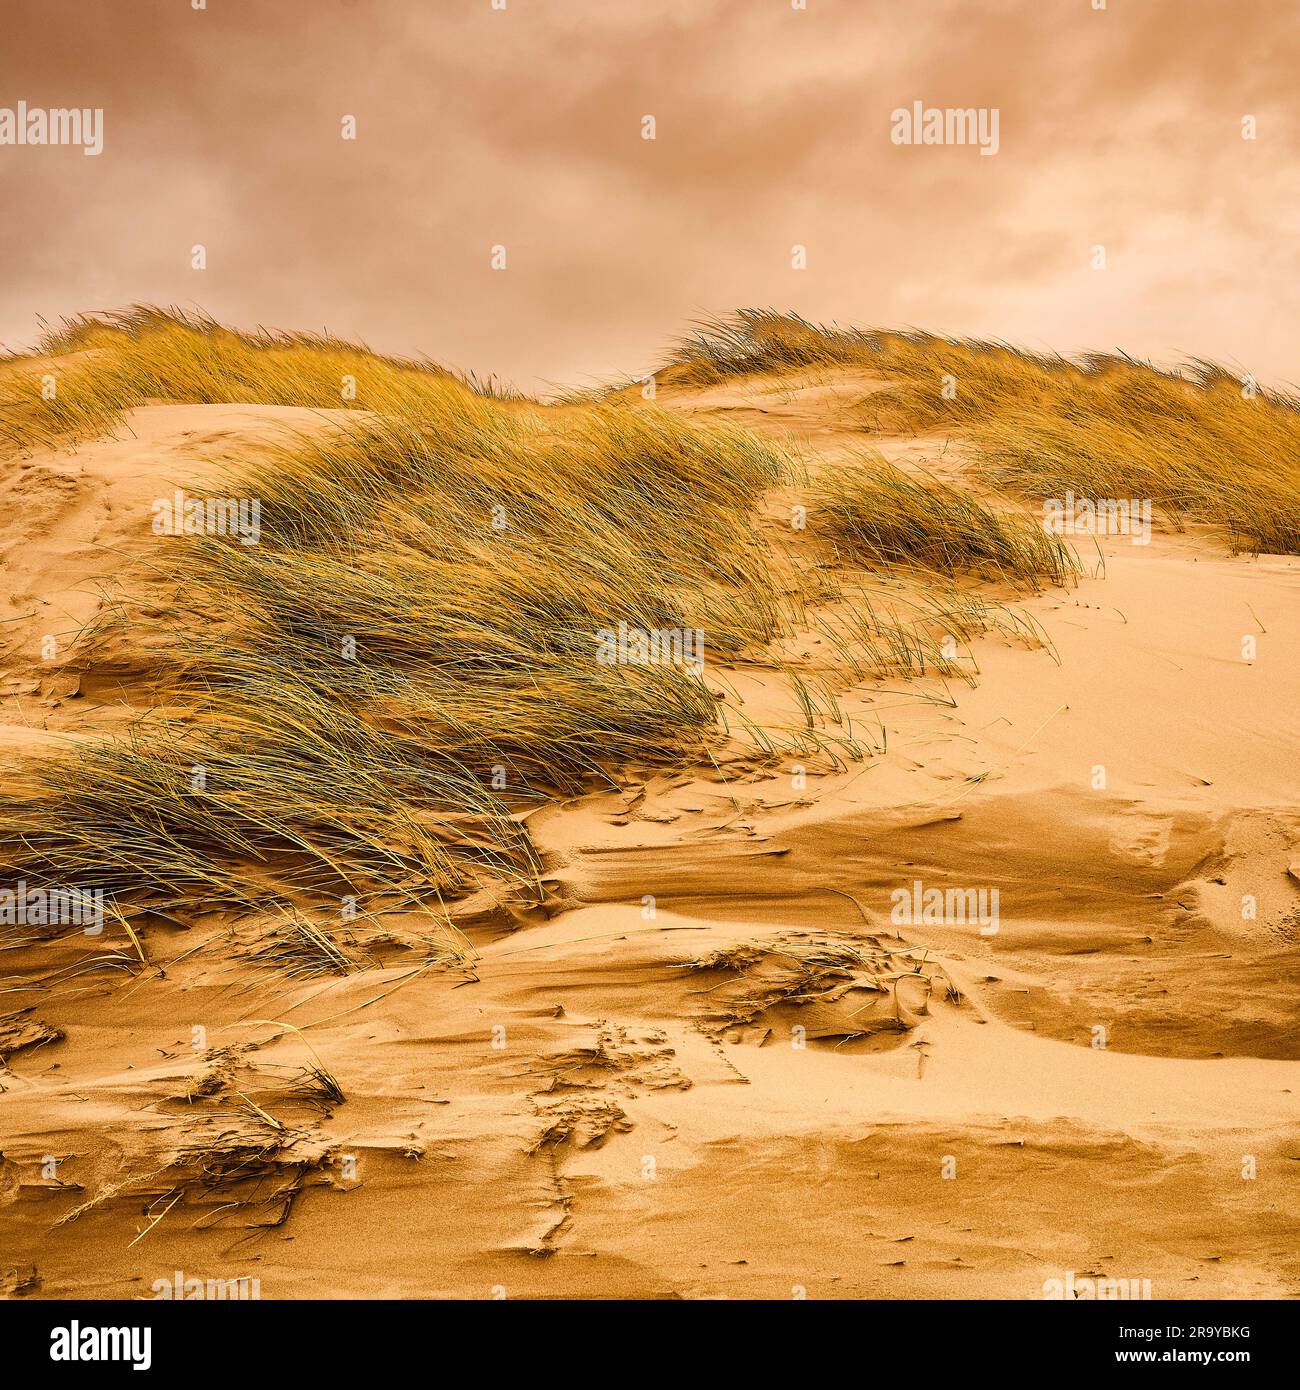 Mars-like sand dunes Stock Photo